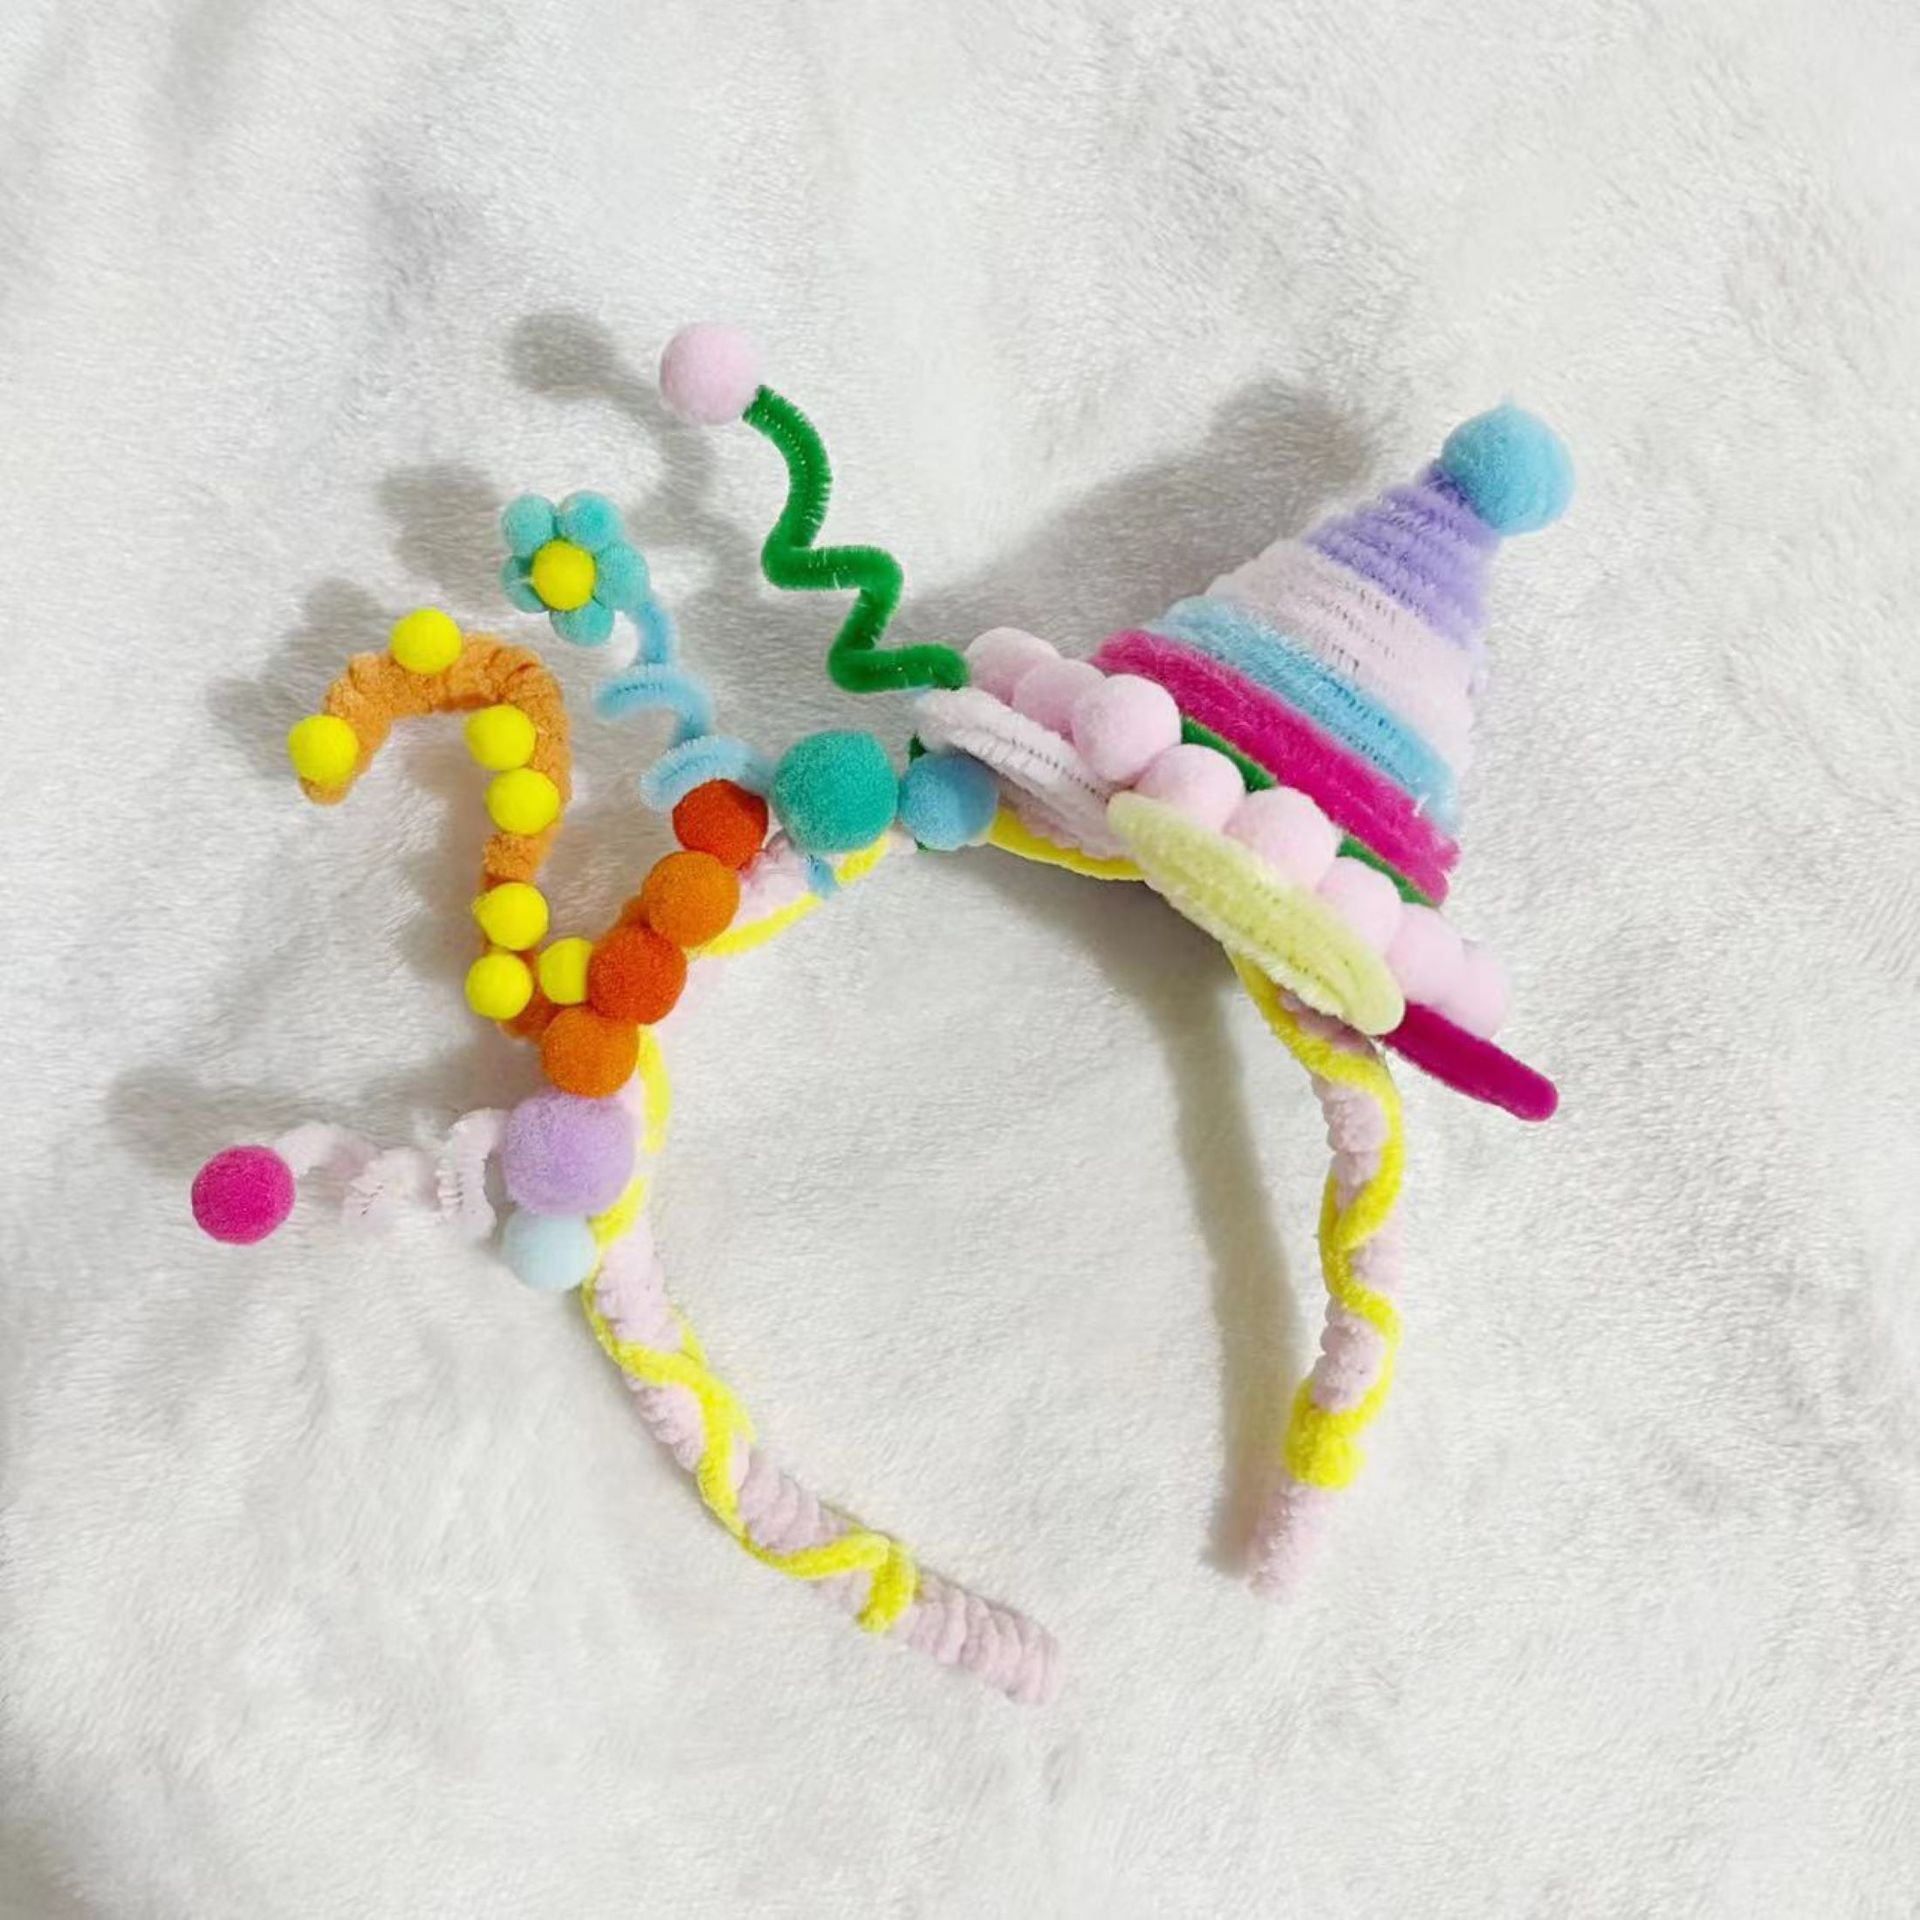 Twisted Stick Handmade Headband Finished Children's Birthday Hat Dinner Party Photo Props Cute Childlike Creative Original